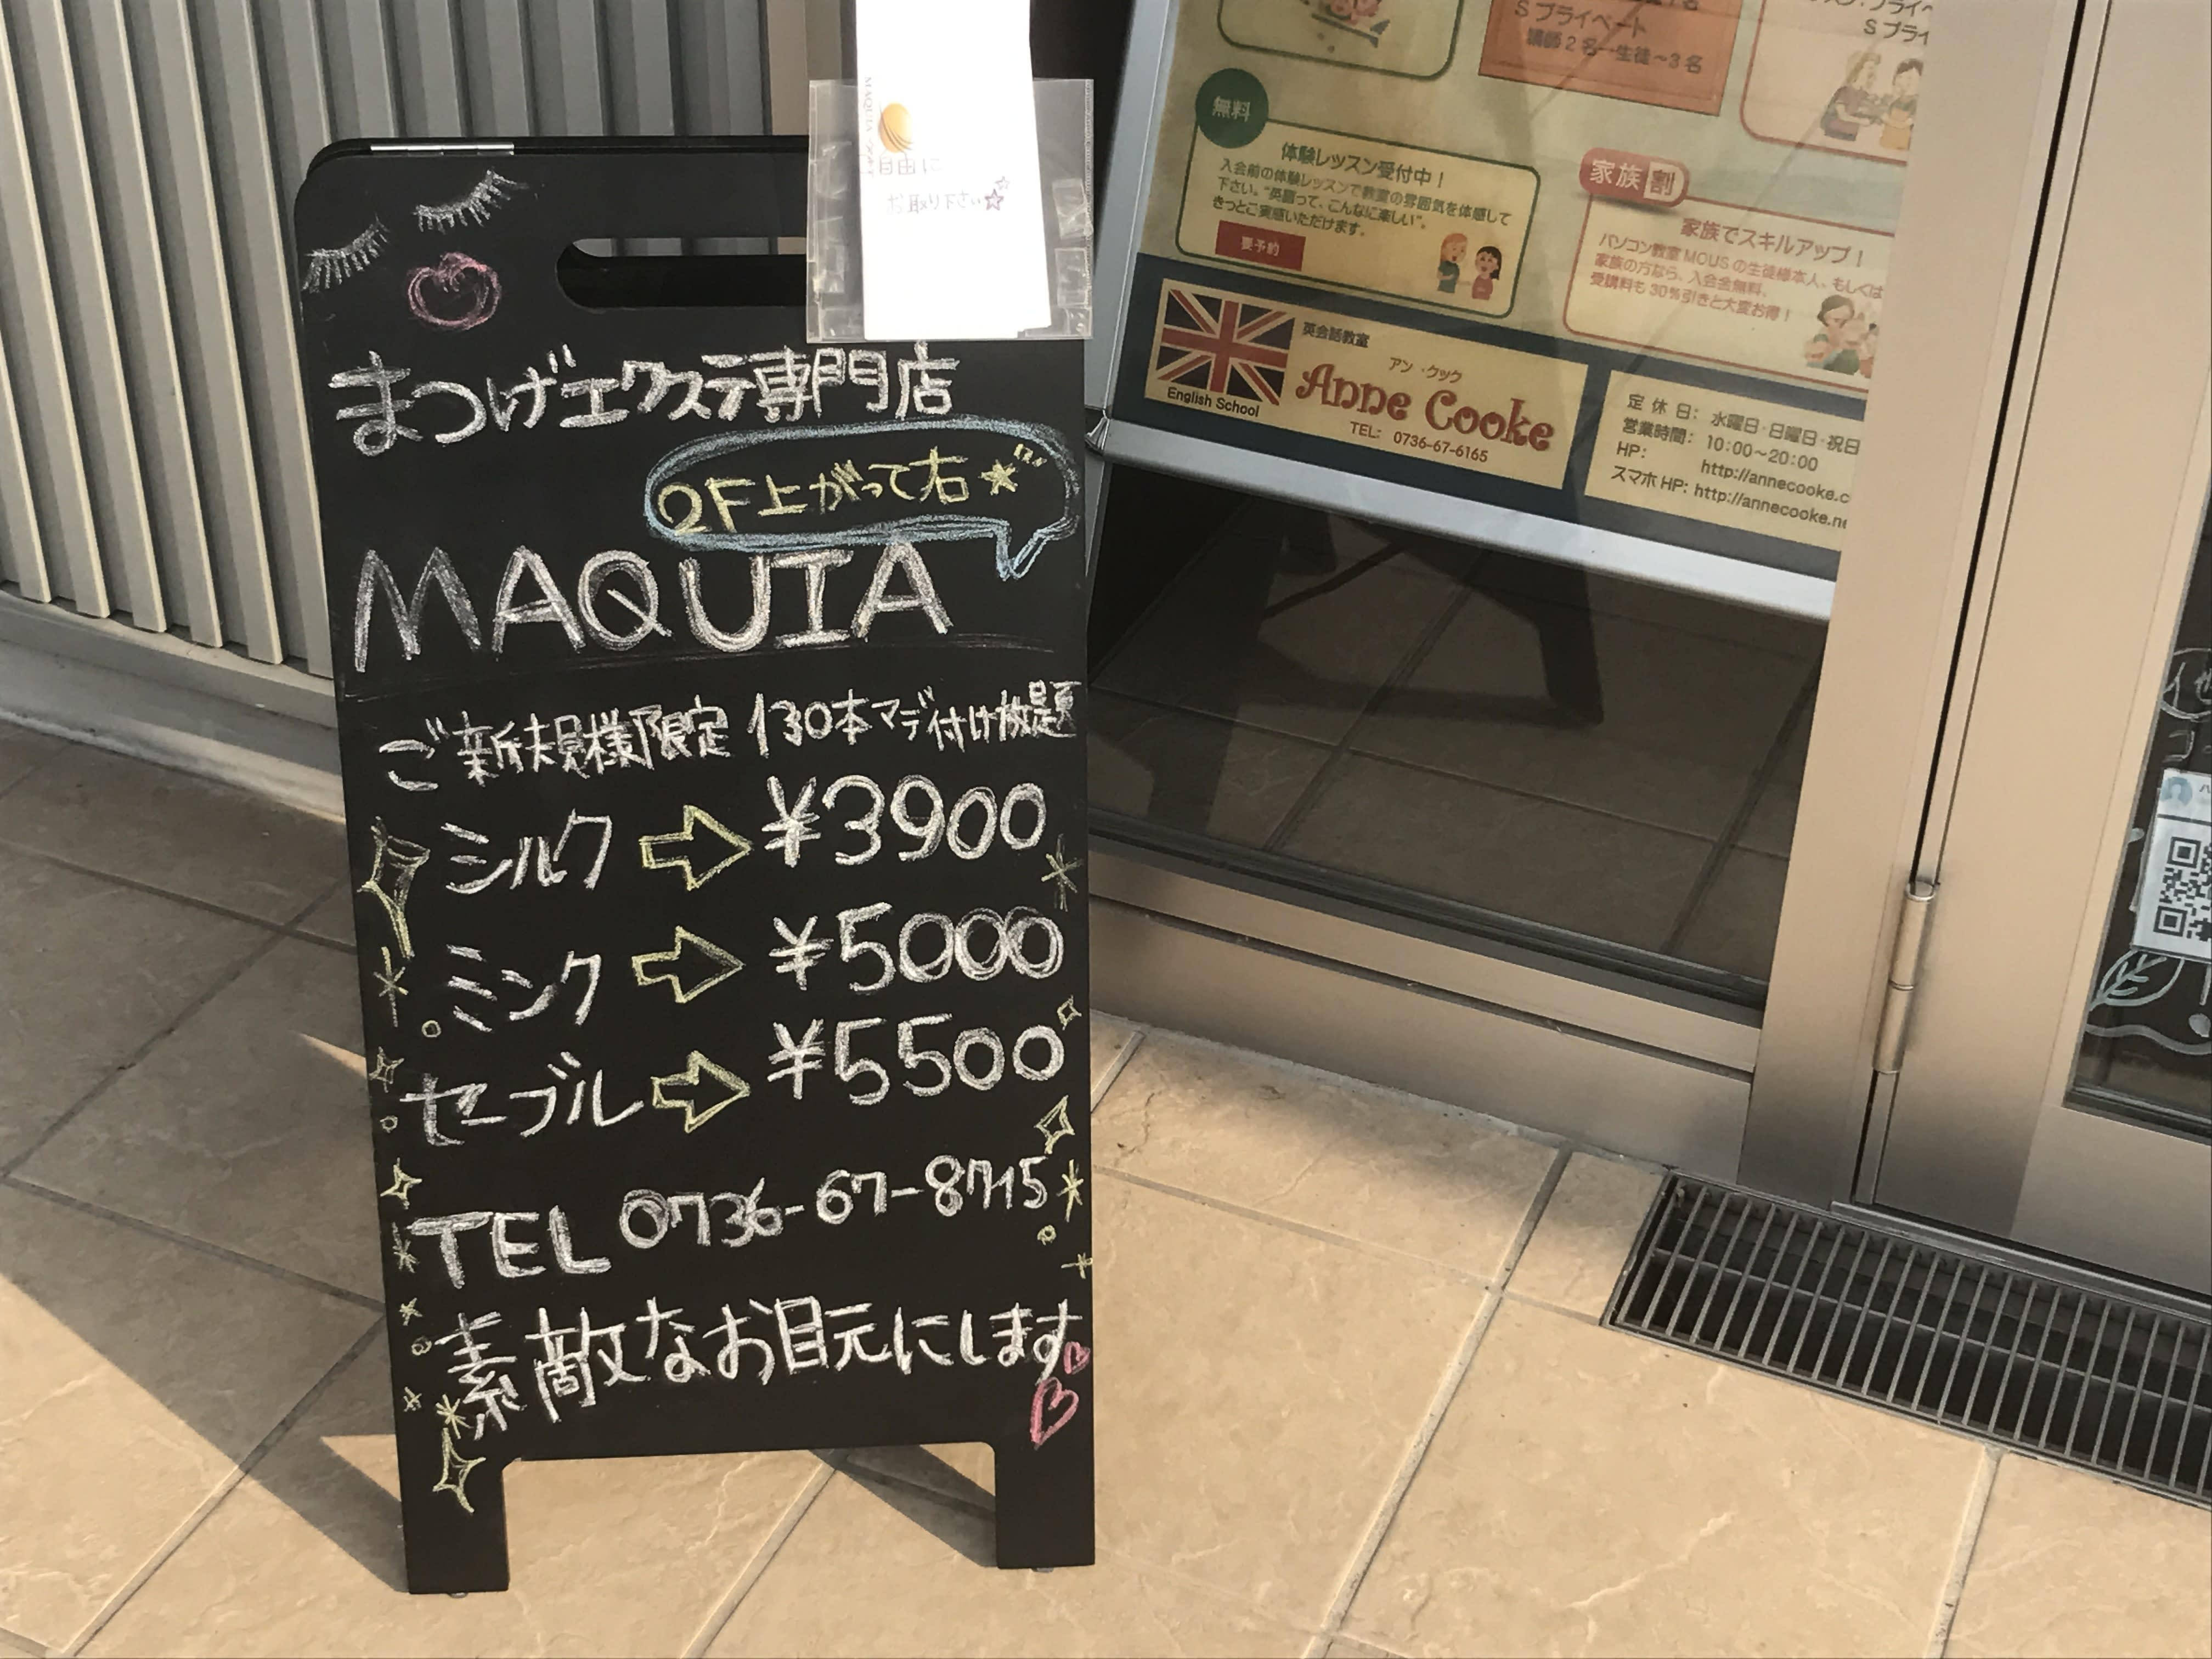 MAQUIA 和歌山岩出店のアイキャッチ画像